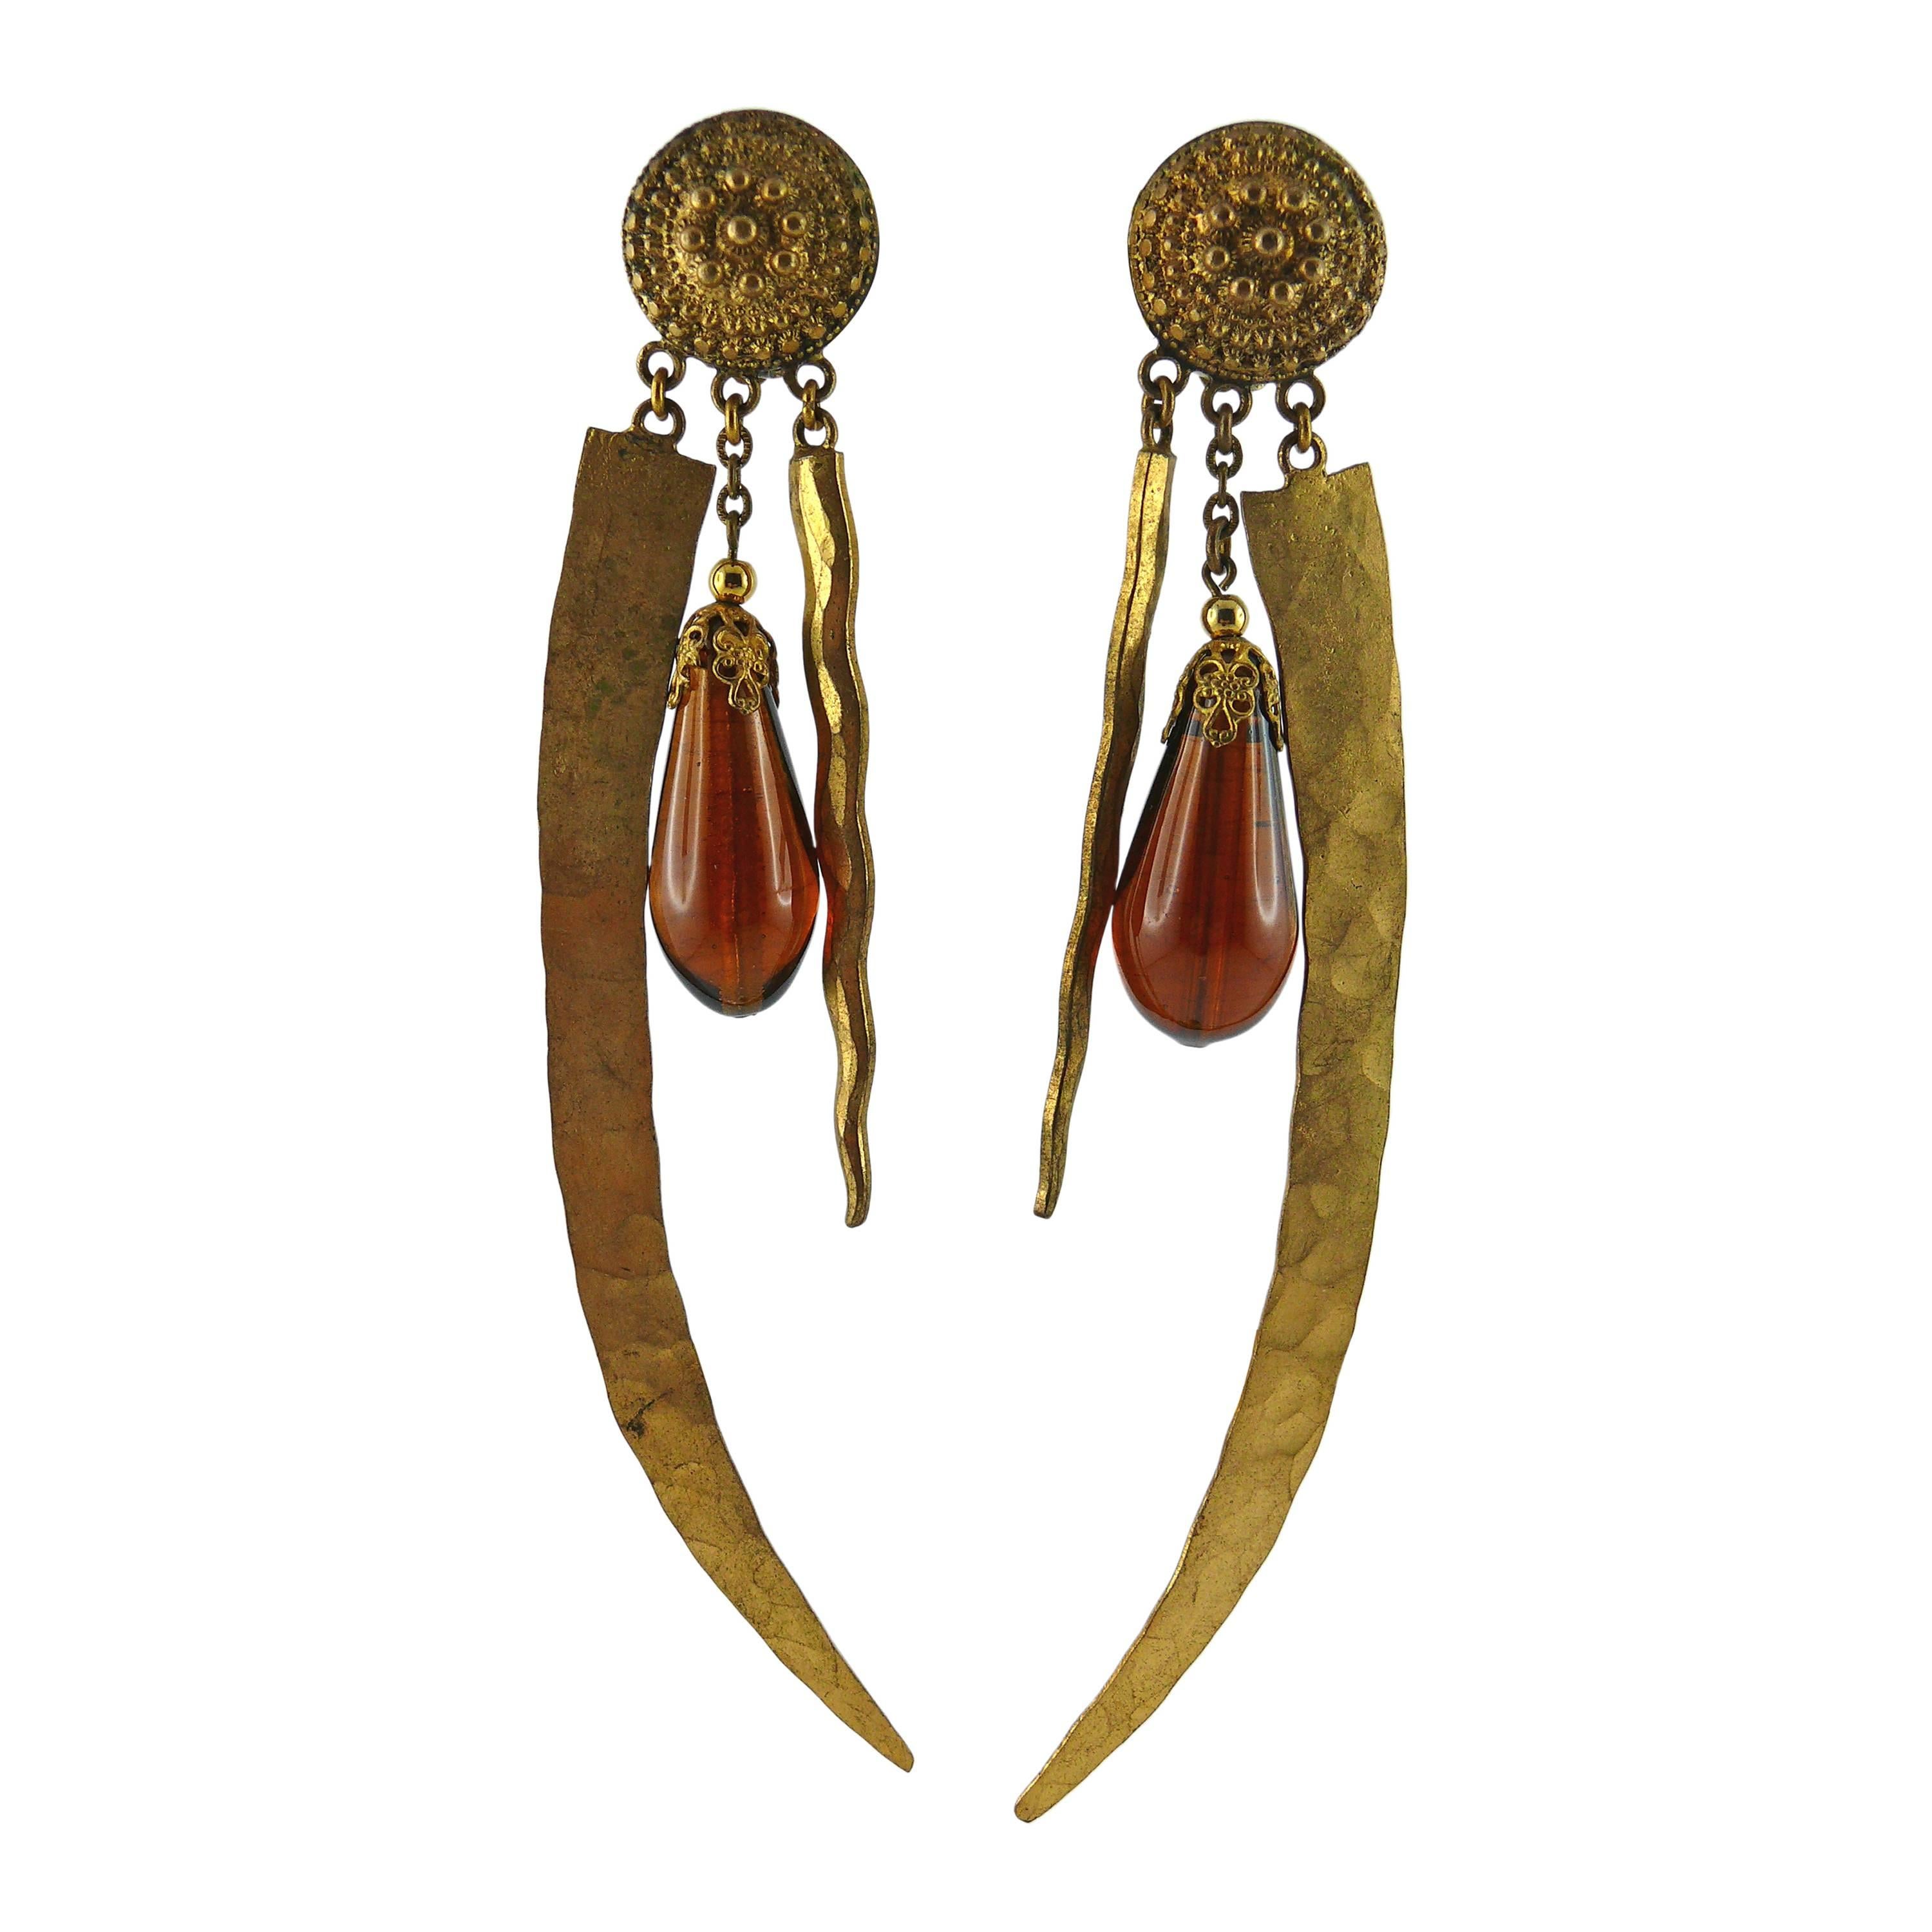 Yves Saint Laurent Vintage Rare Early Oriental Style Dangling Earrings